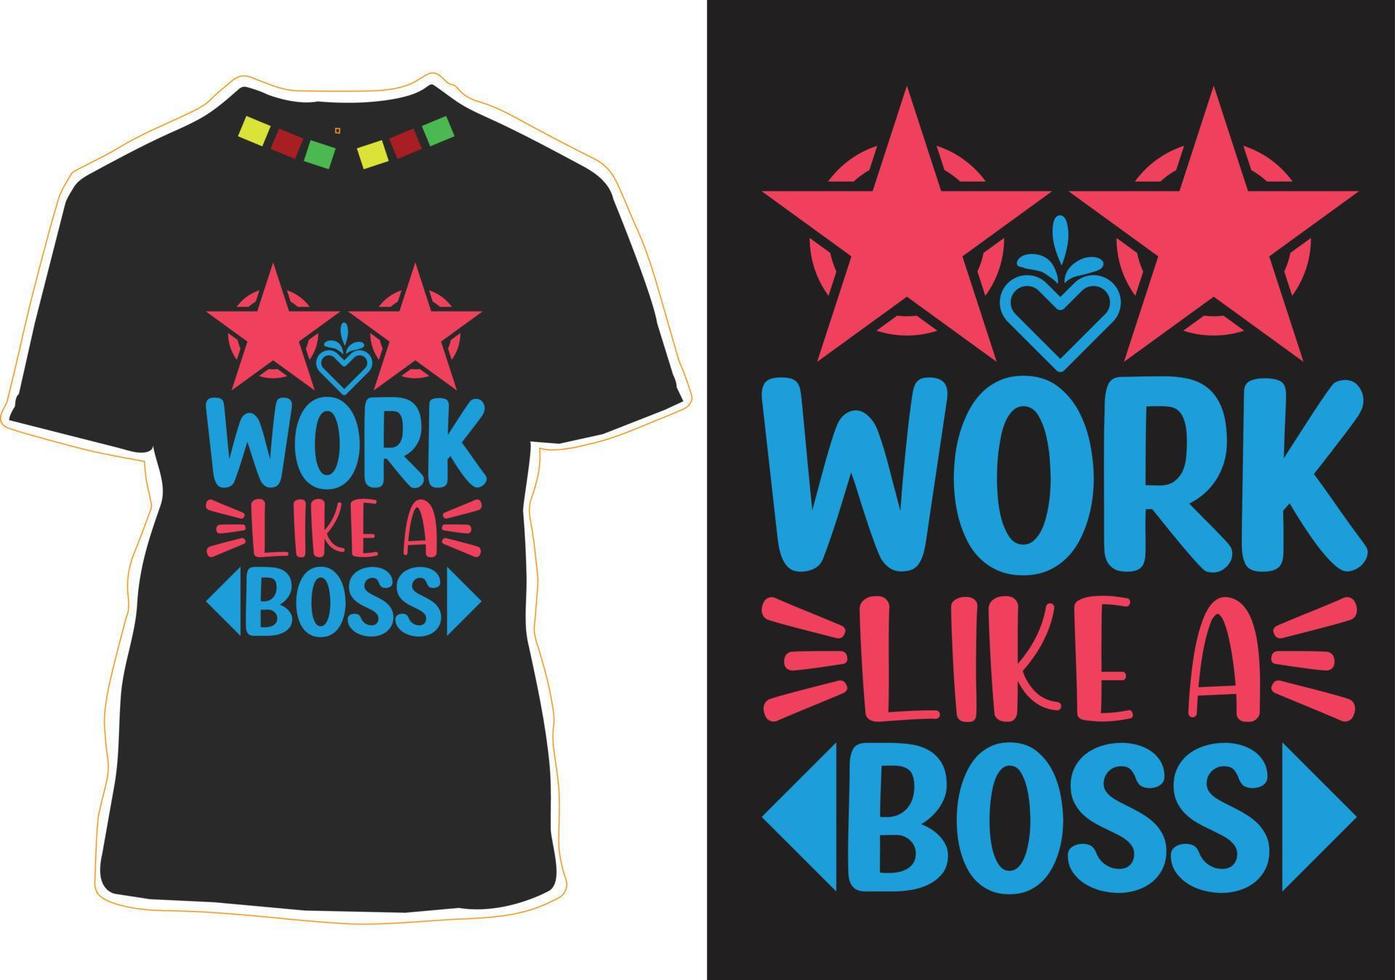 arbeta loke en chef motiverande citat t-shirt design vektor